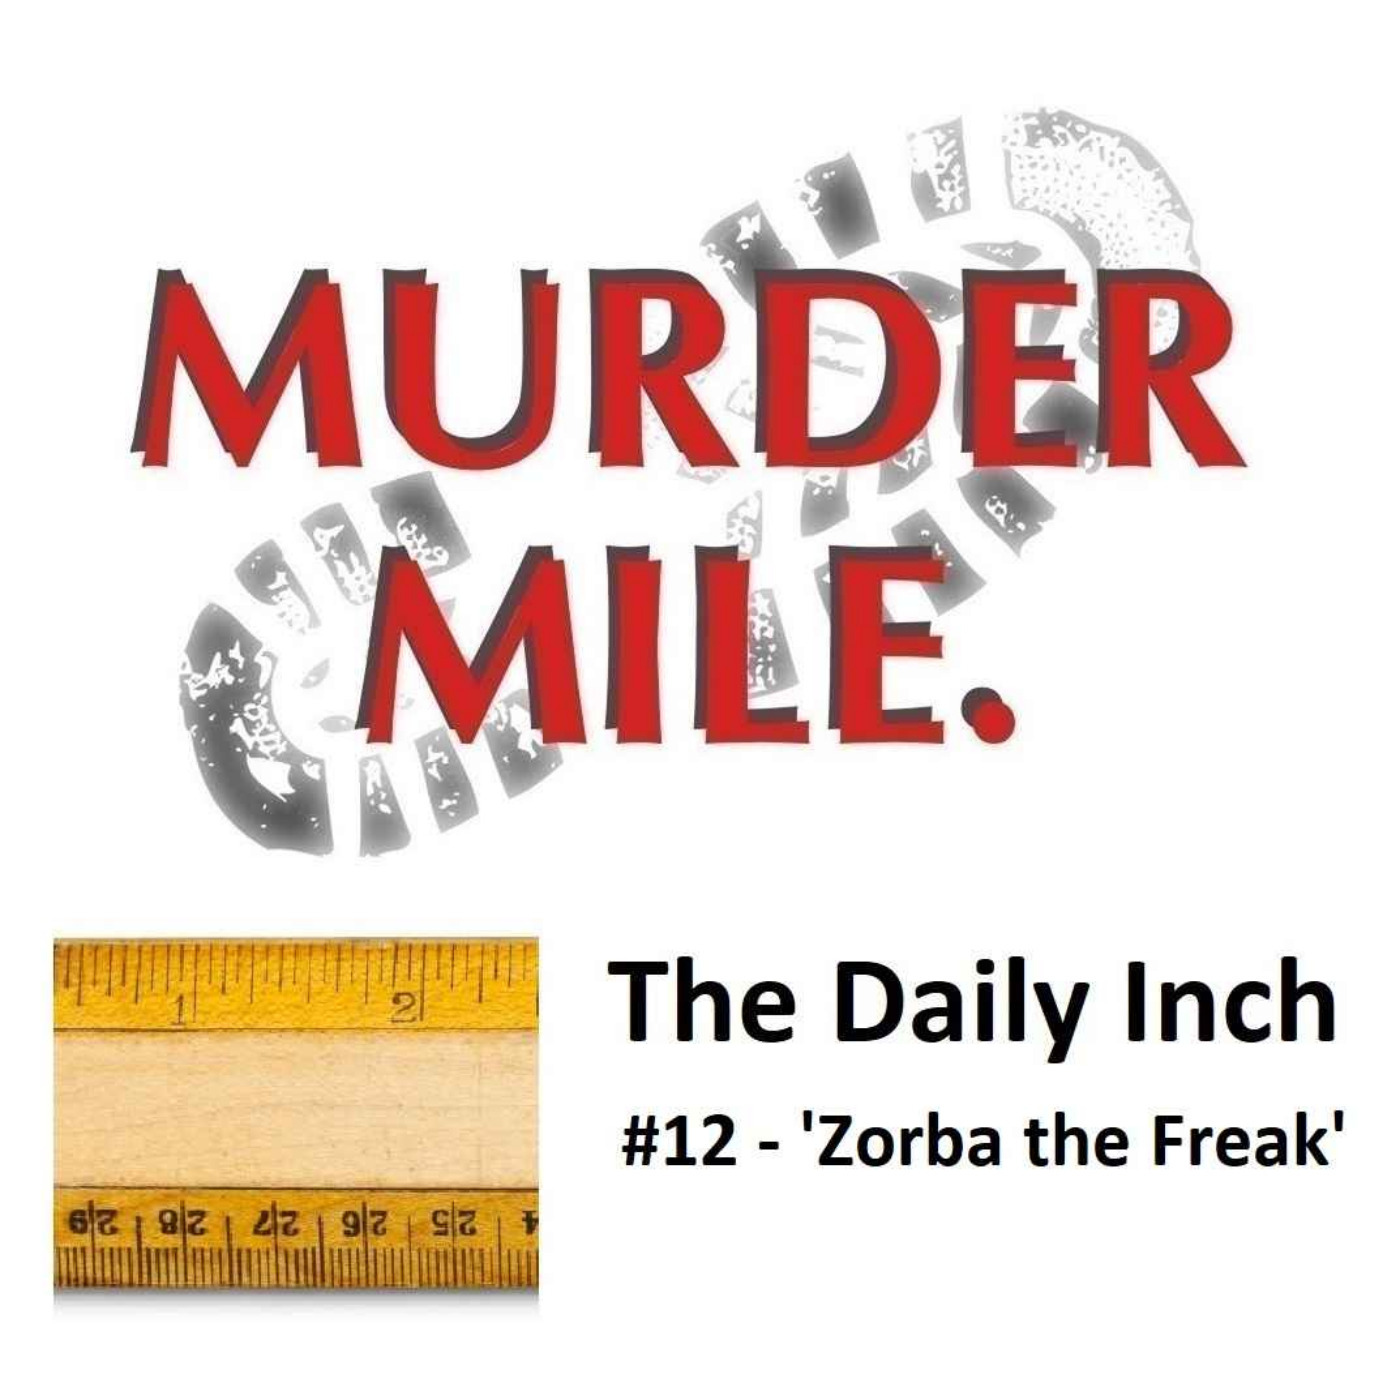 The Daily Inch #12 - 'Zorba the Freak'